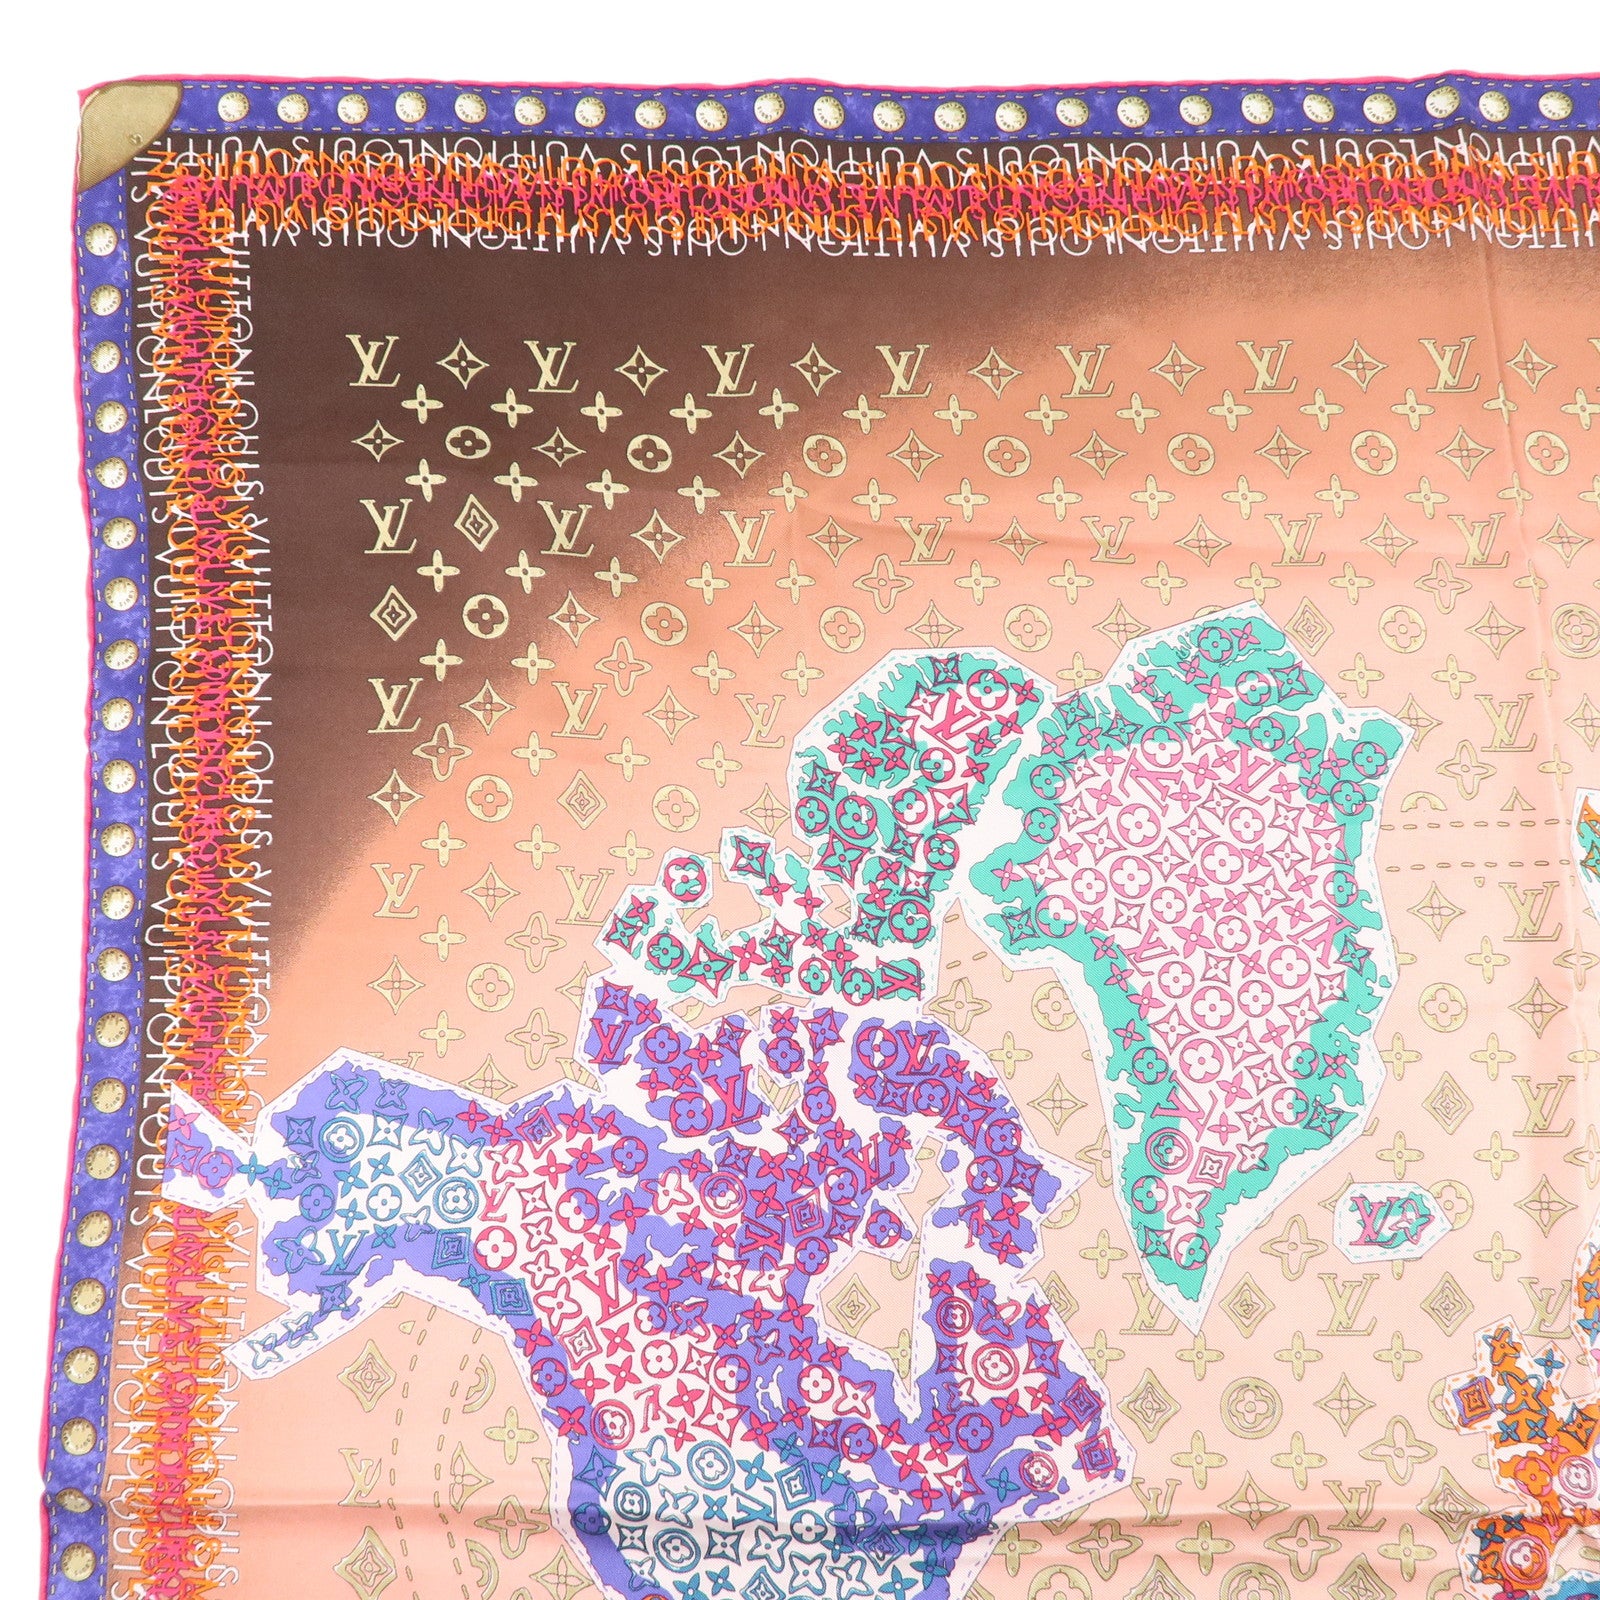 Louis-Vuitton-Monogram-100%-Silk-Scarf-World-Map-Brown-Pink